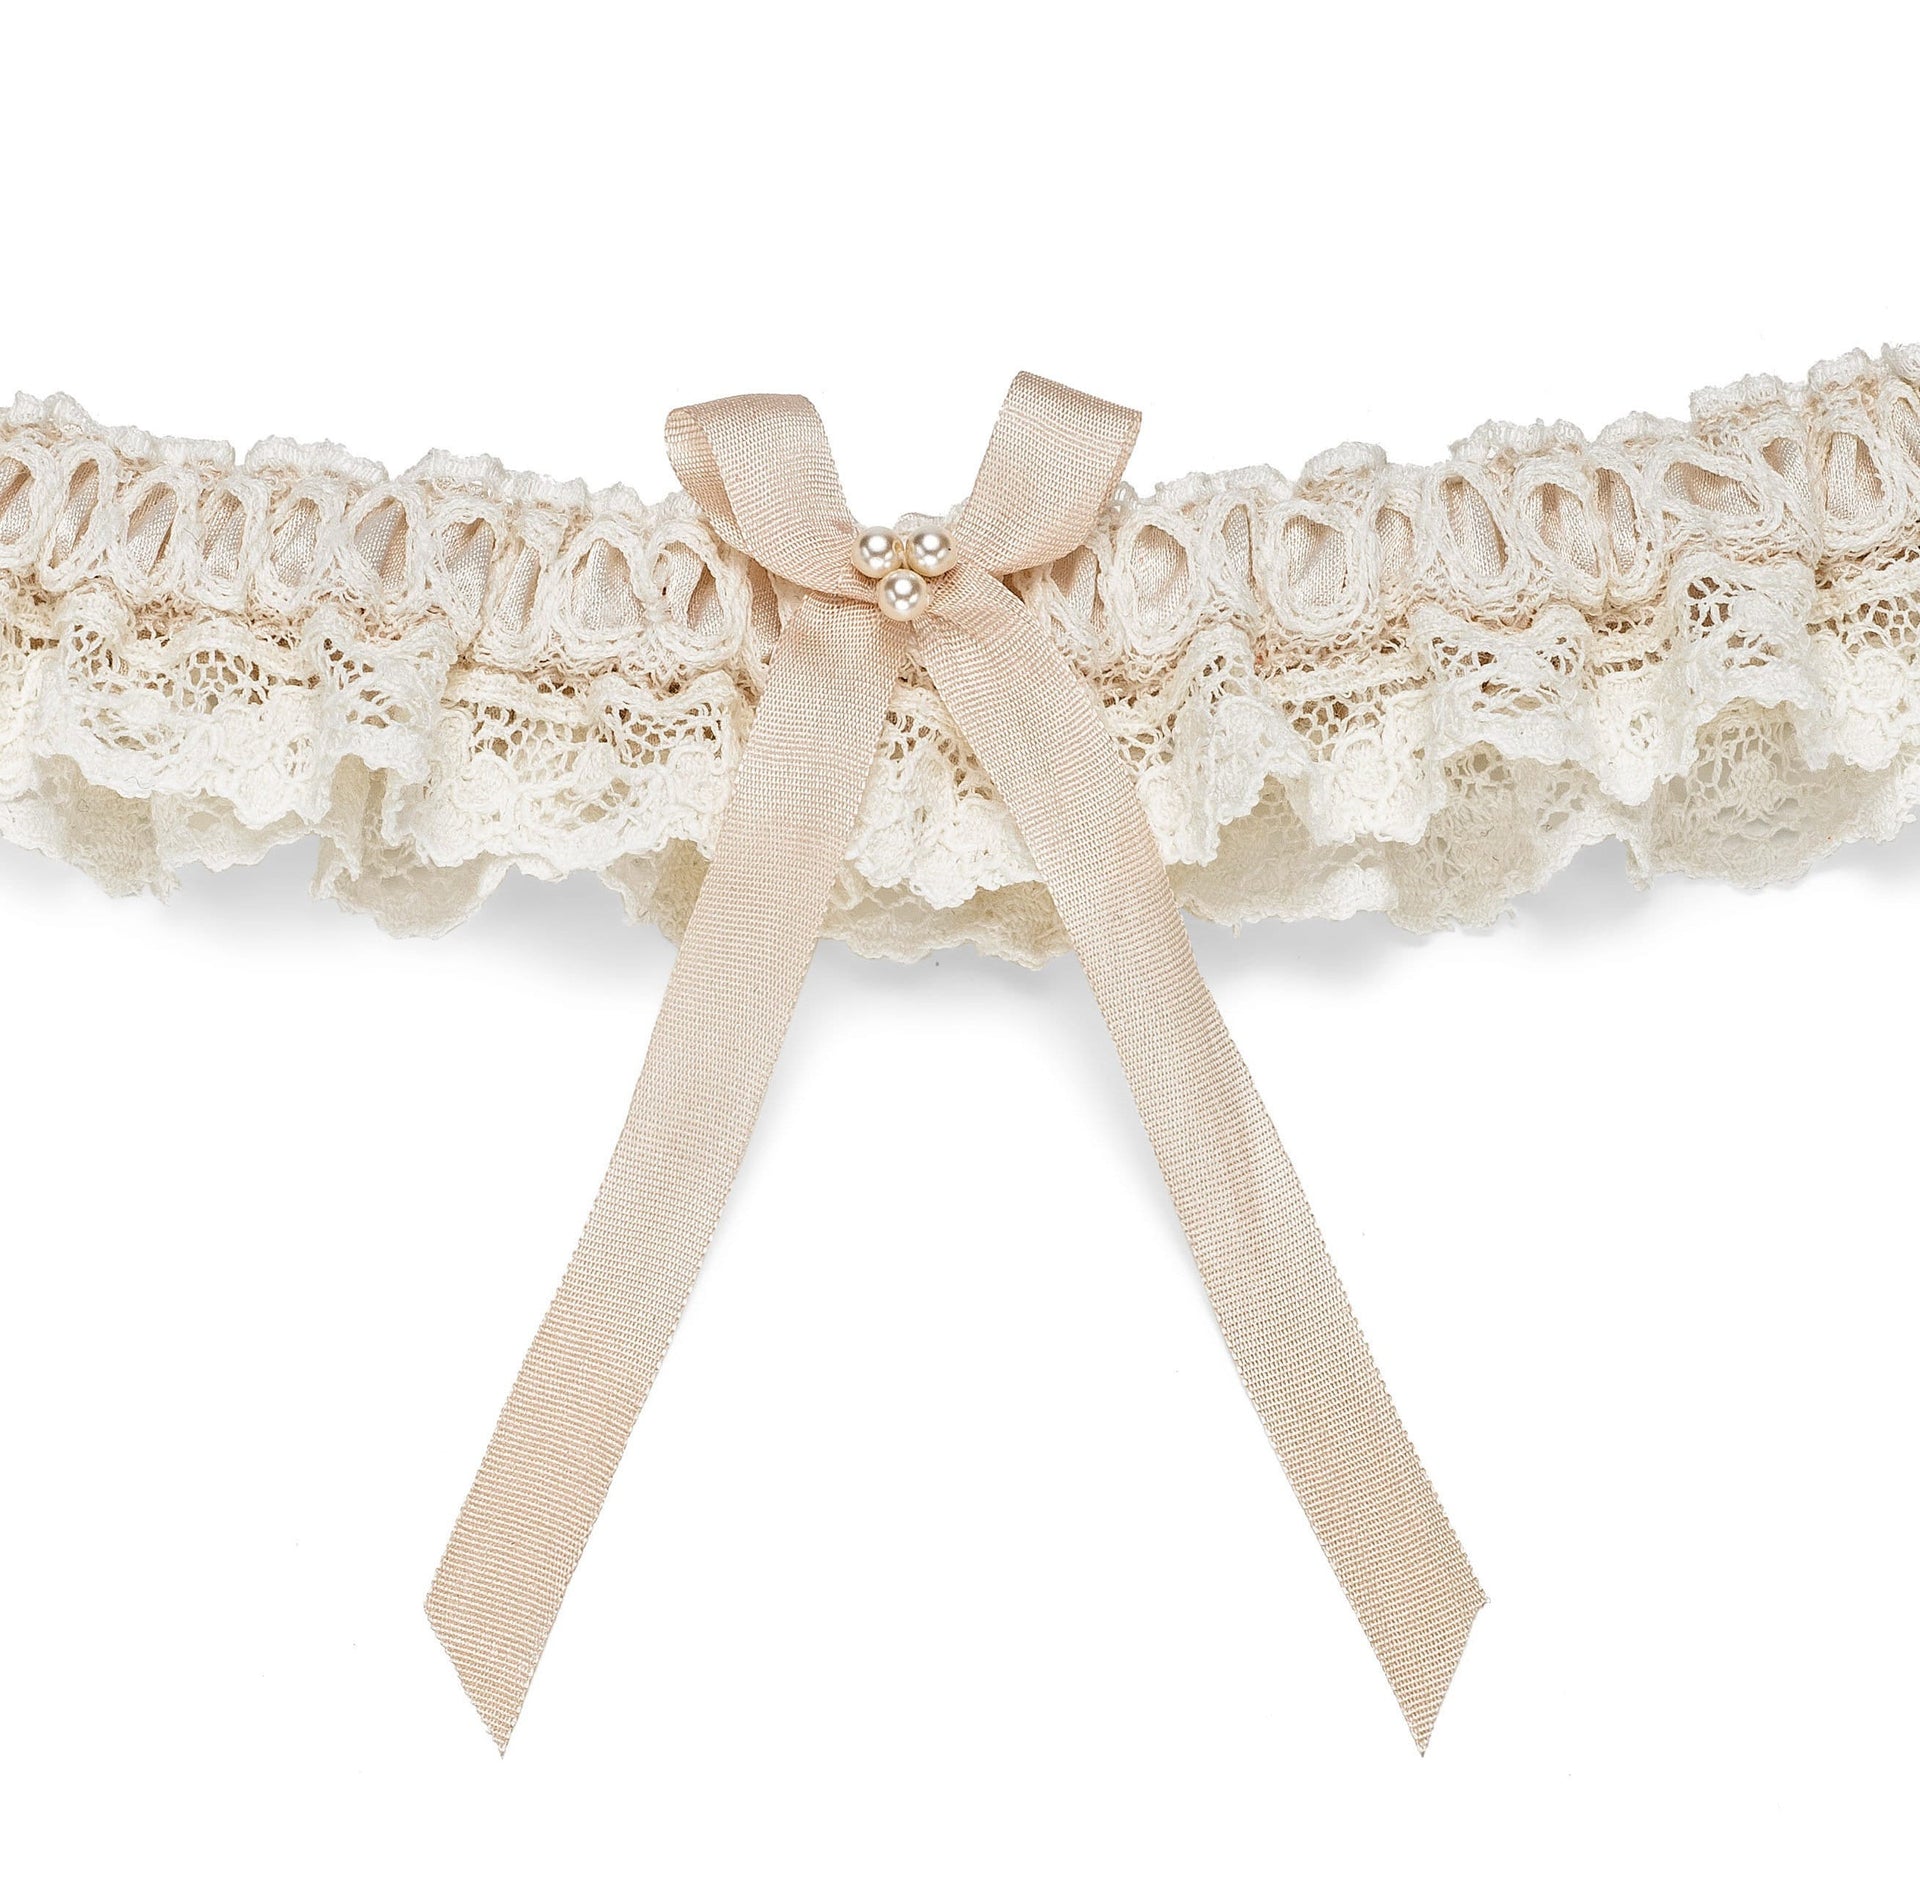 Silk wedding garter handmade in Truro, Cornwall, UK